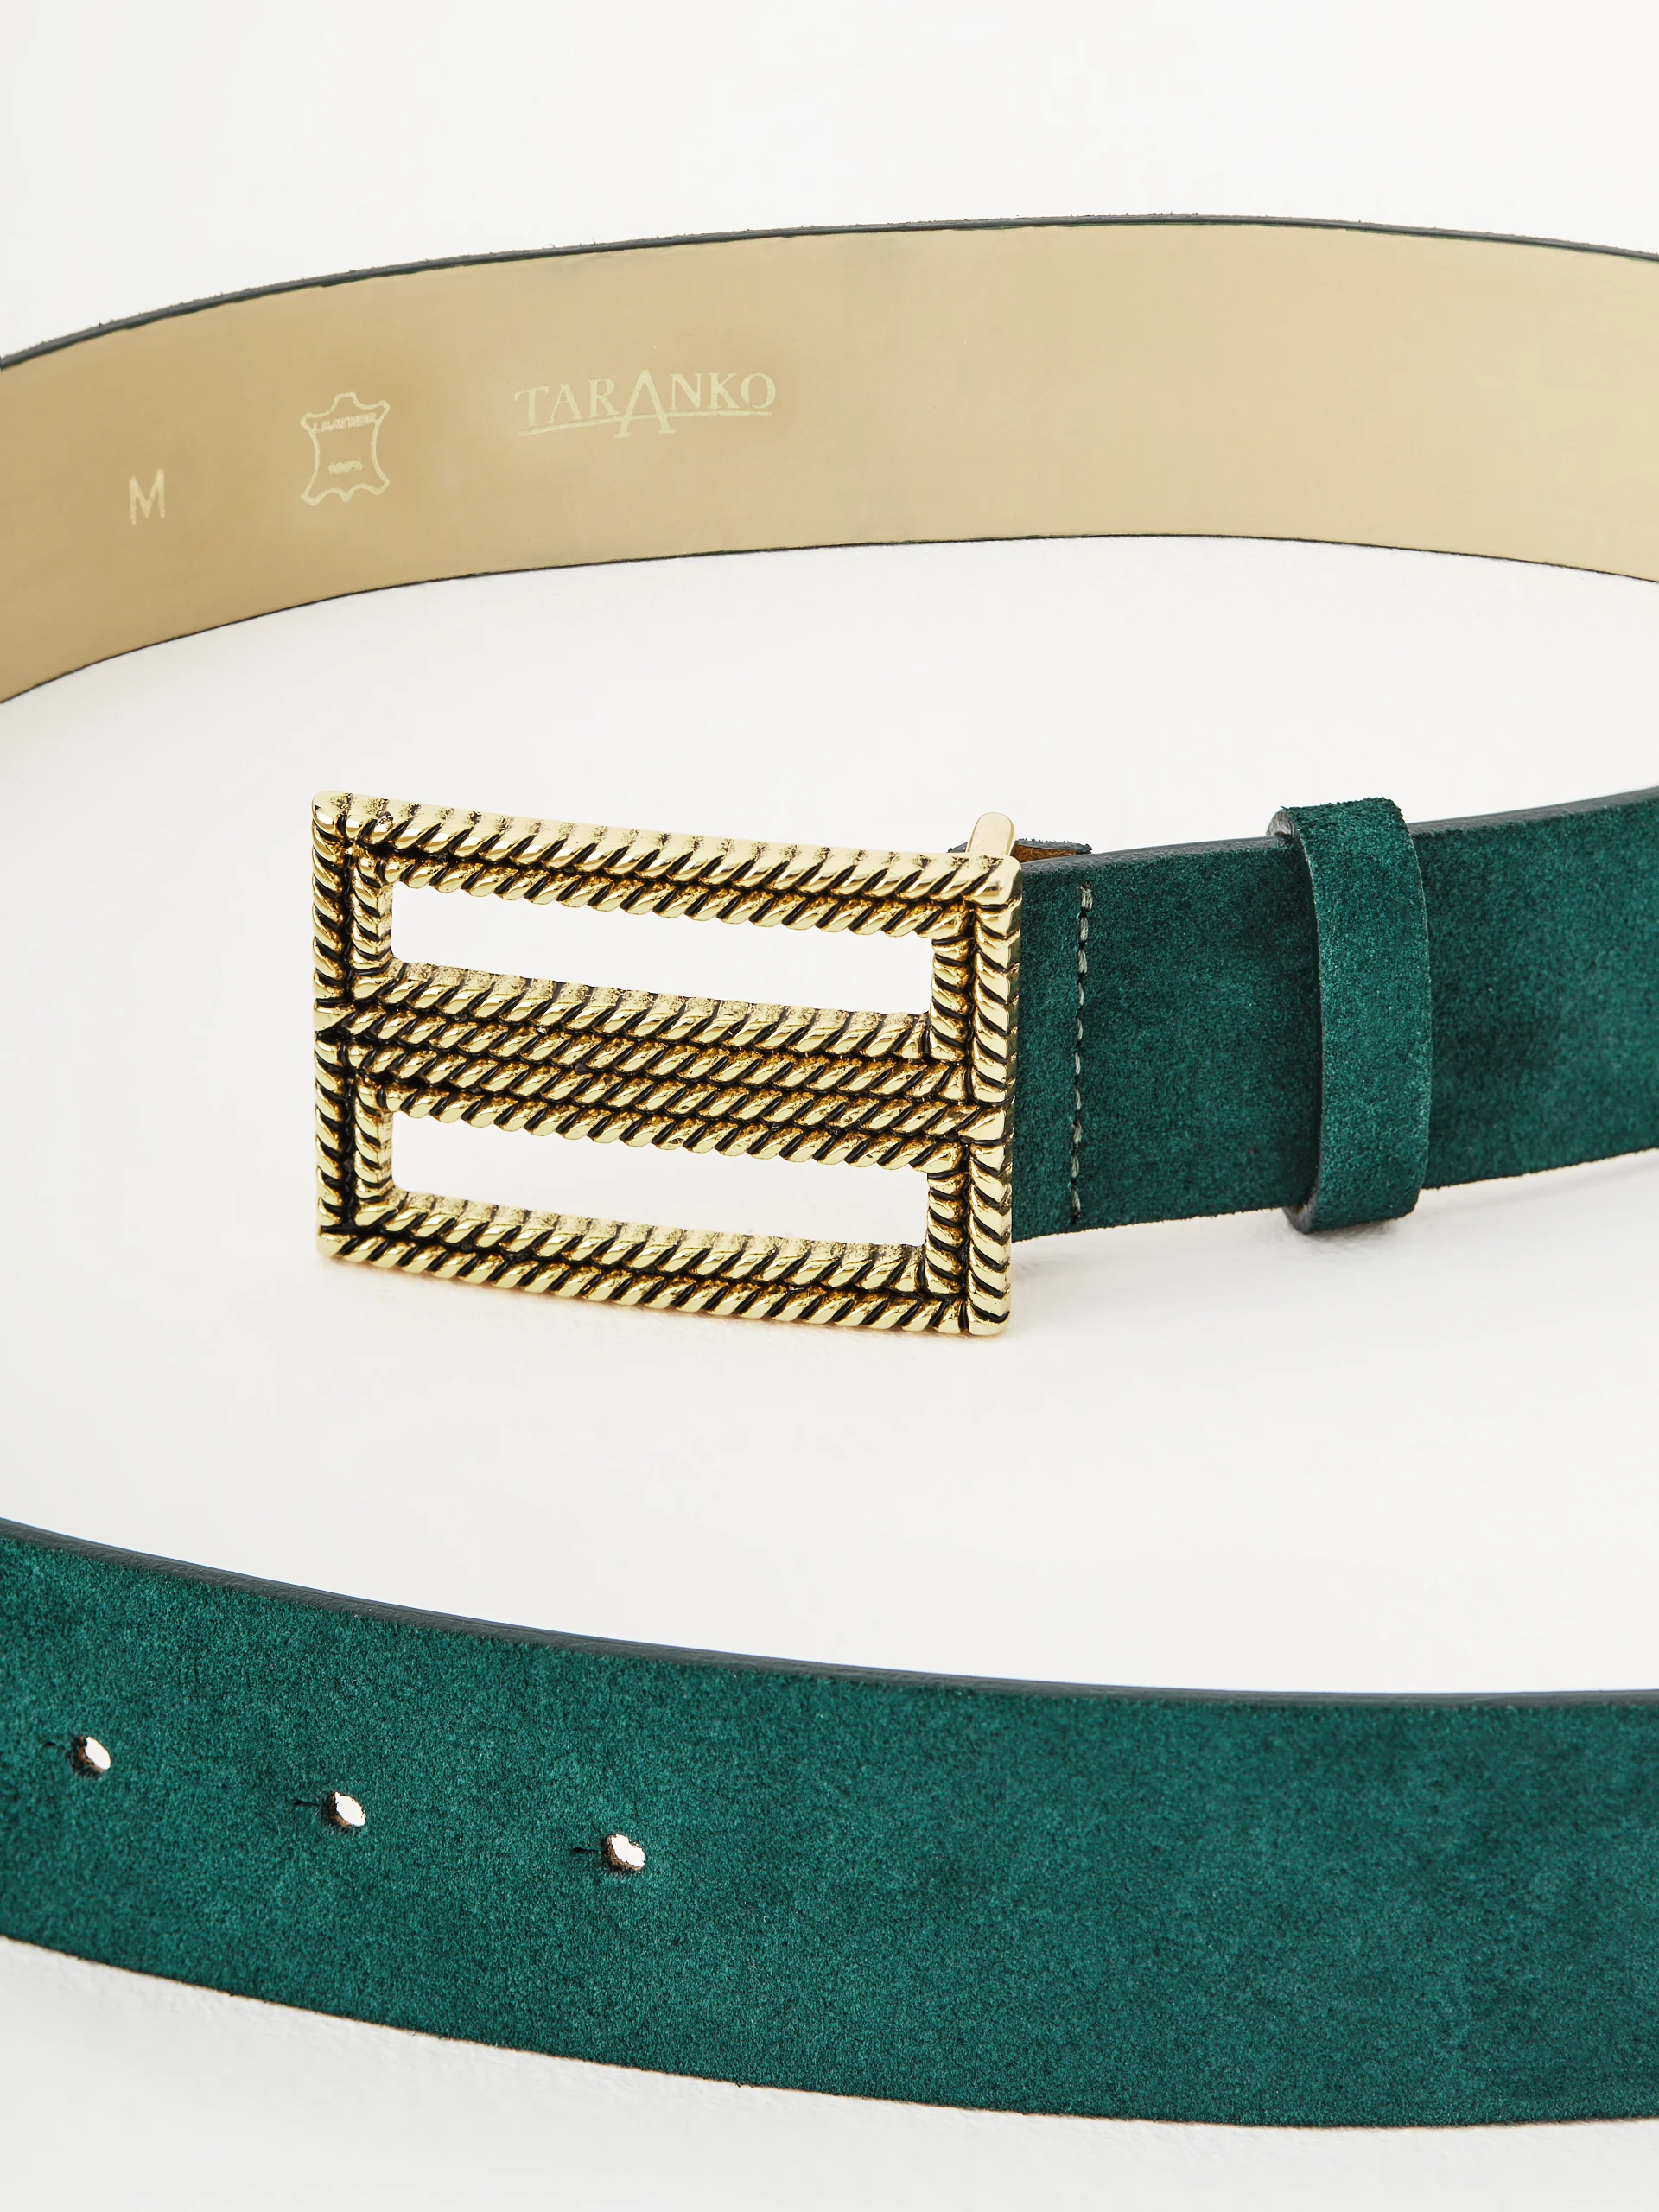 Green leather belt